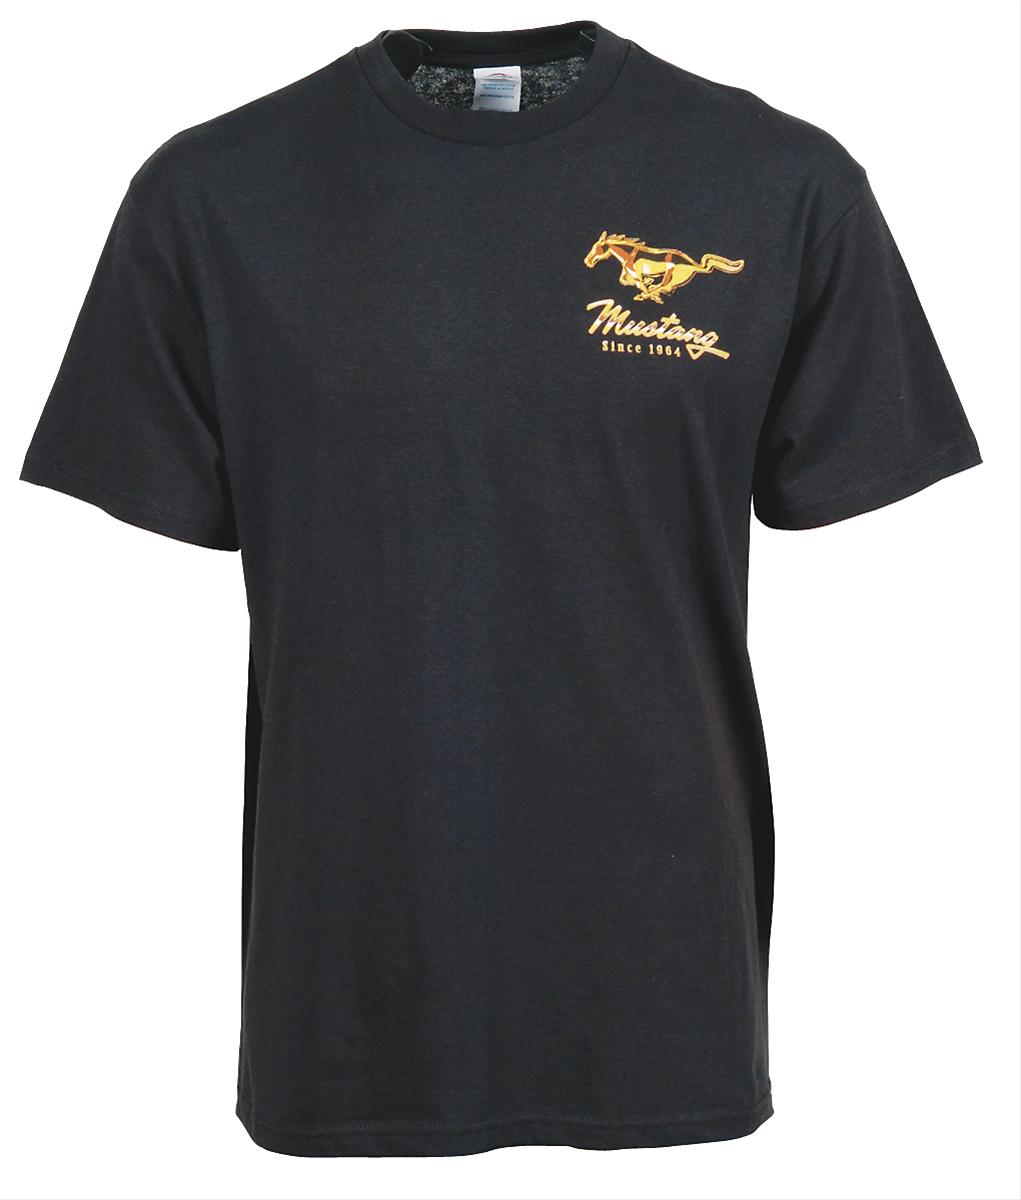 Mustang Since 1964 T-Shirt | Summit Racing